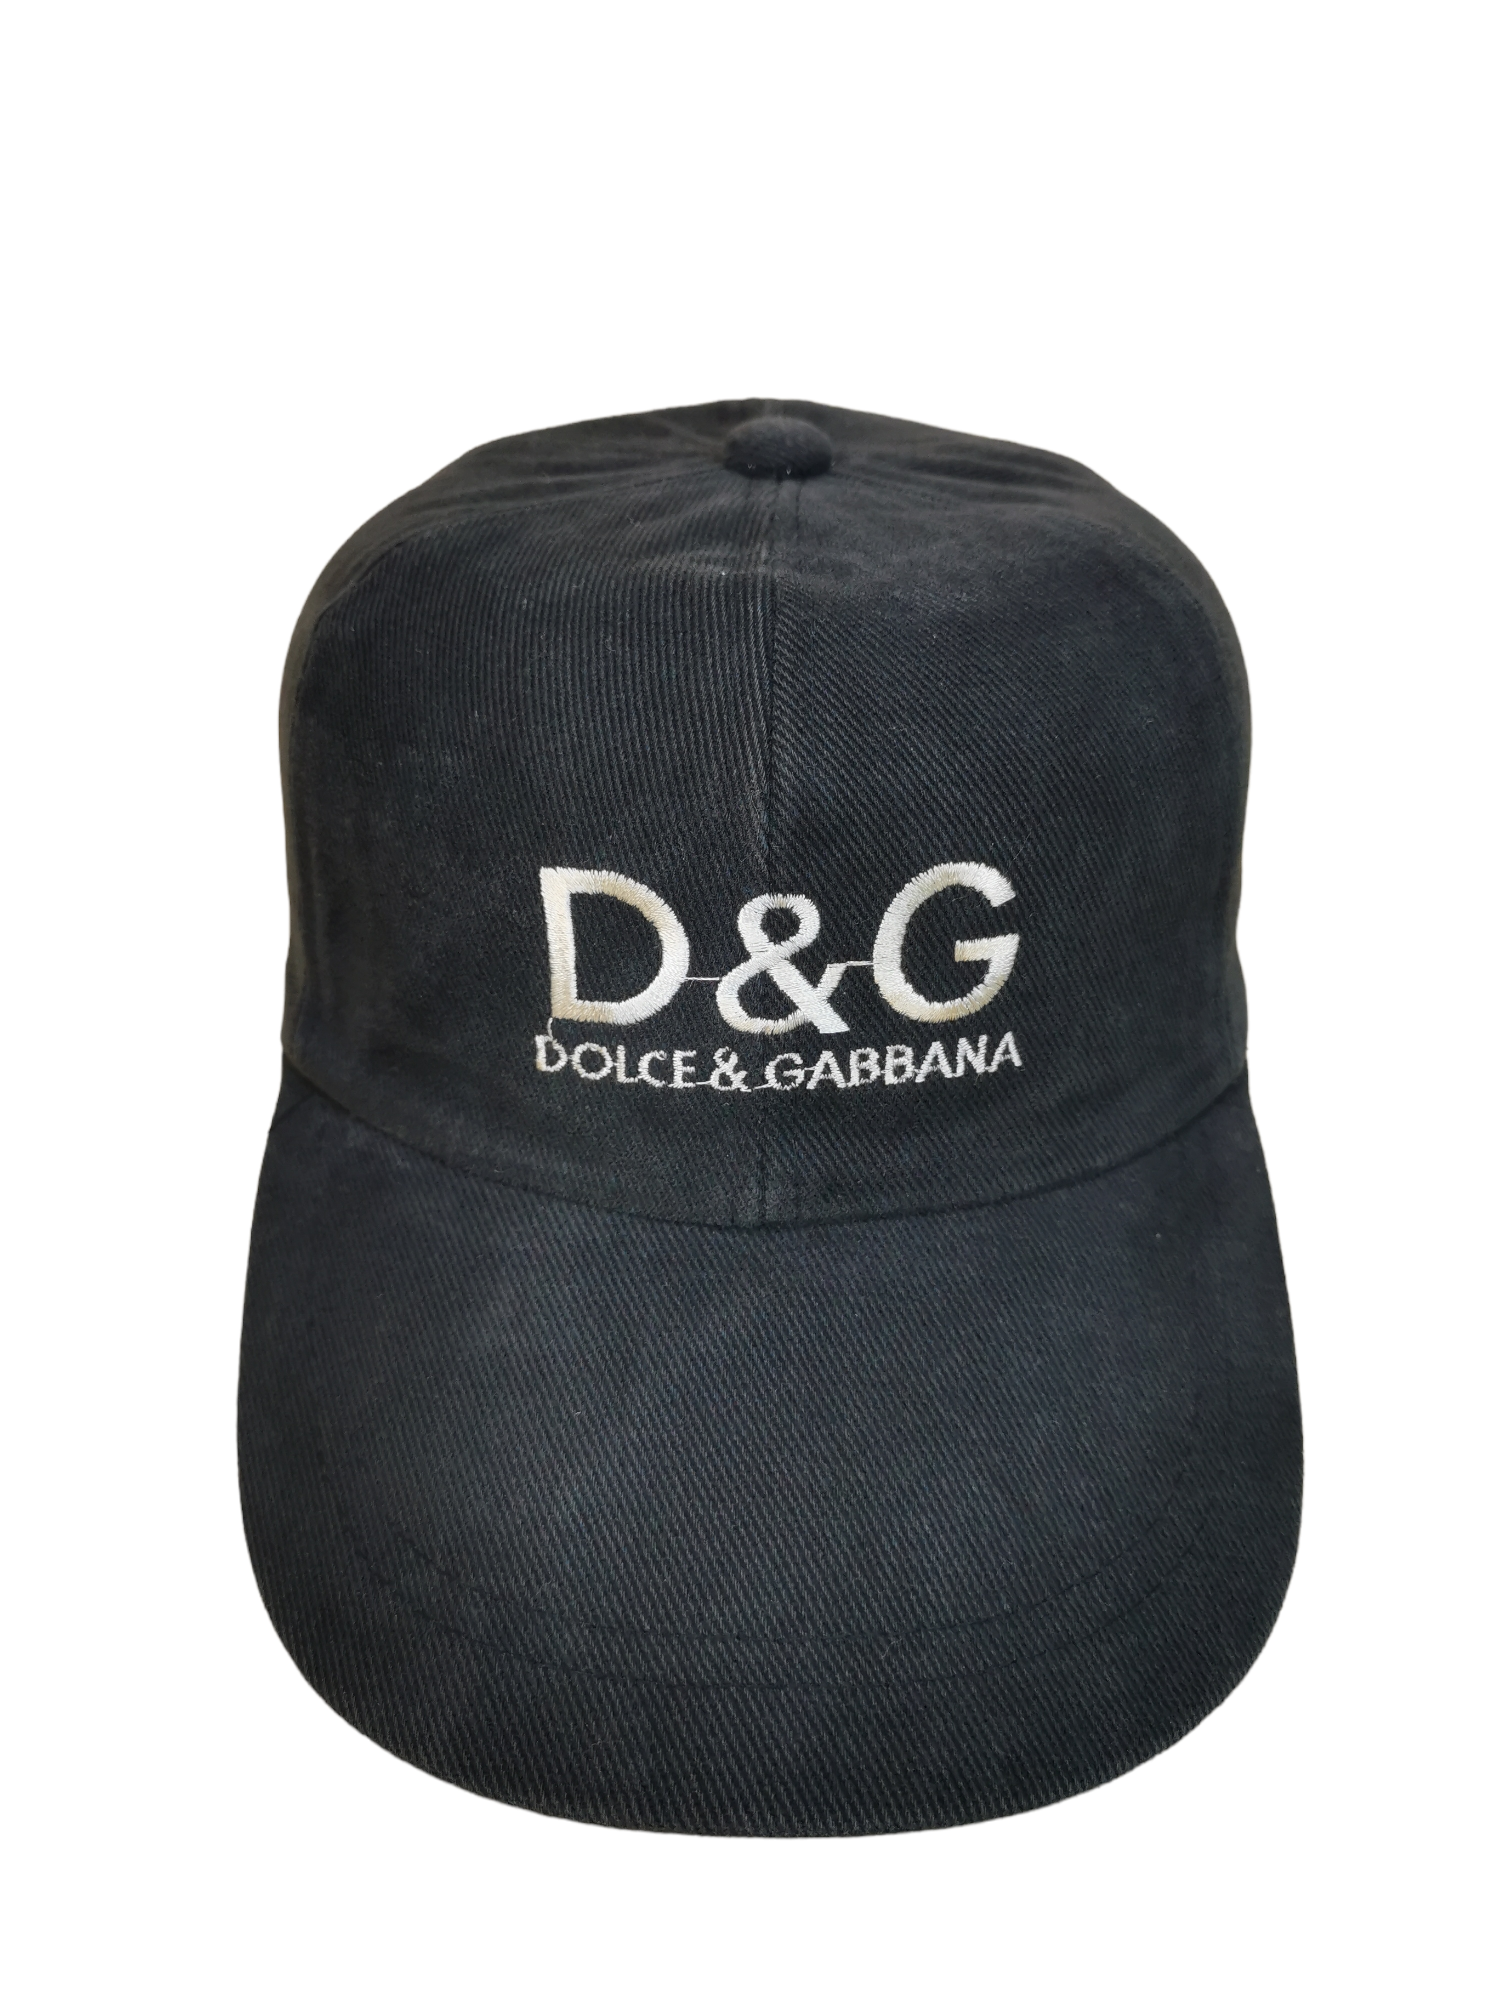 VINTAGE DOLCE & GABBANA HAT CAP - 1